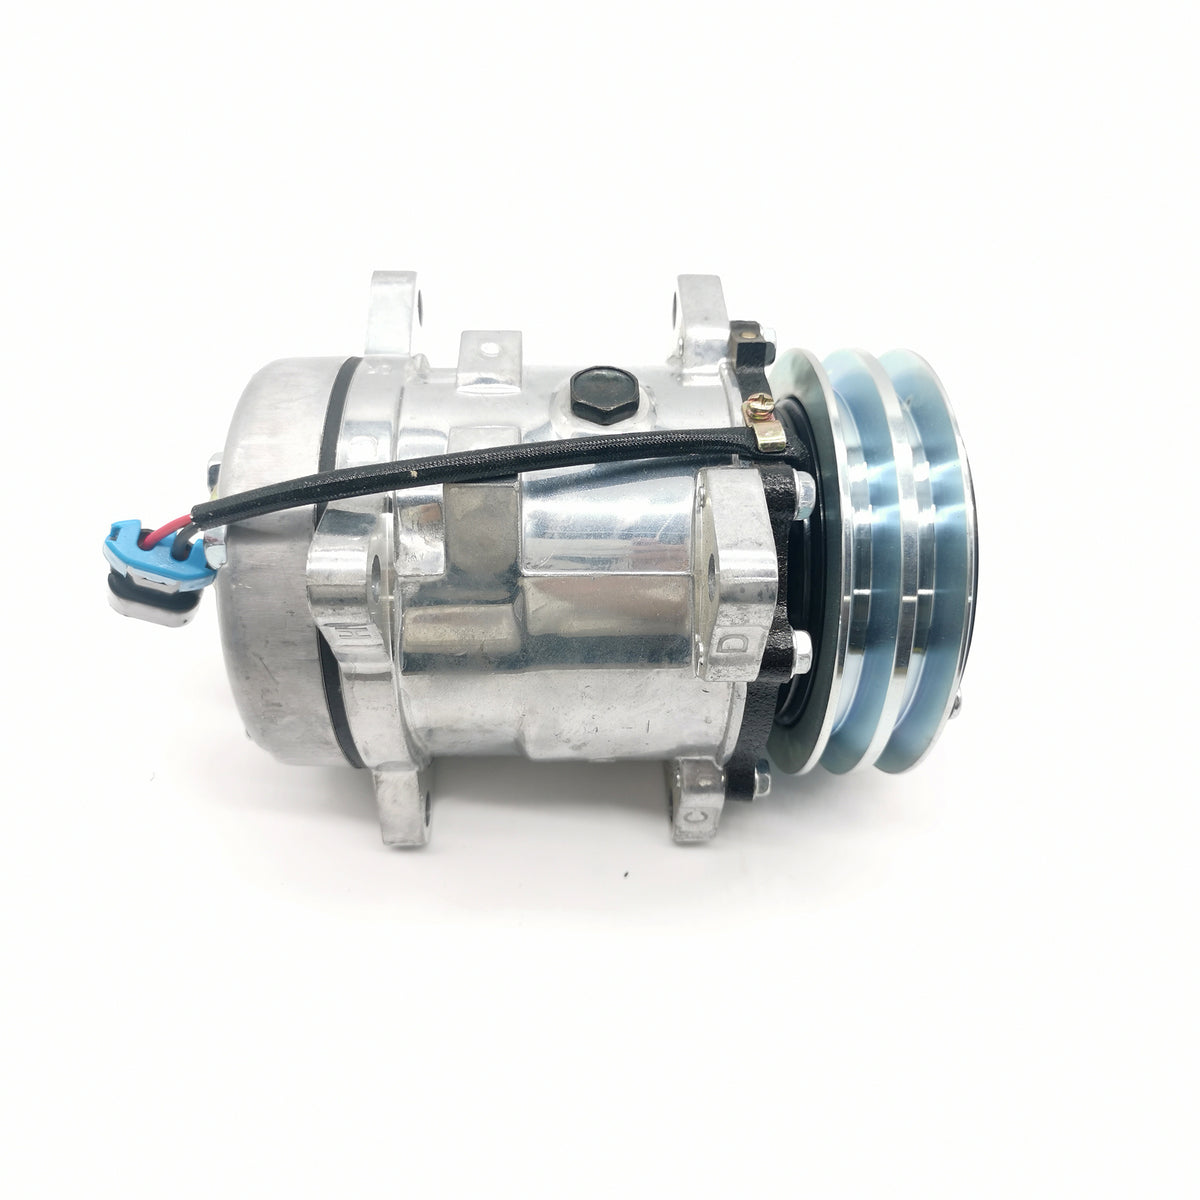 Air Conditioning Compressor 7136676 For Bobcat Skid Steer Loader S150 S185 S205